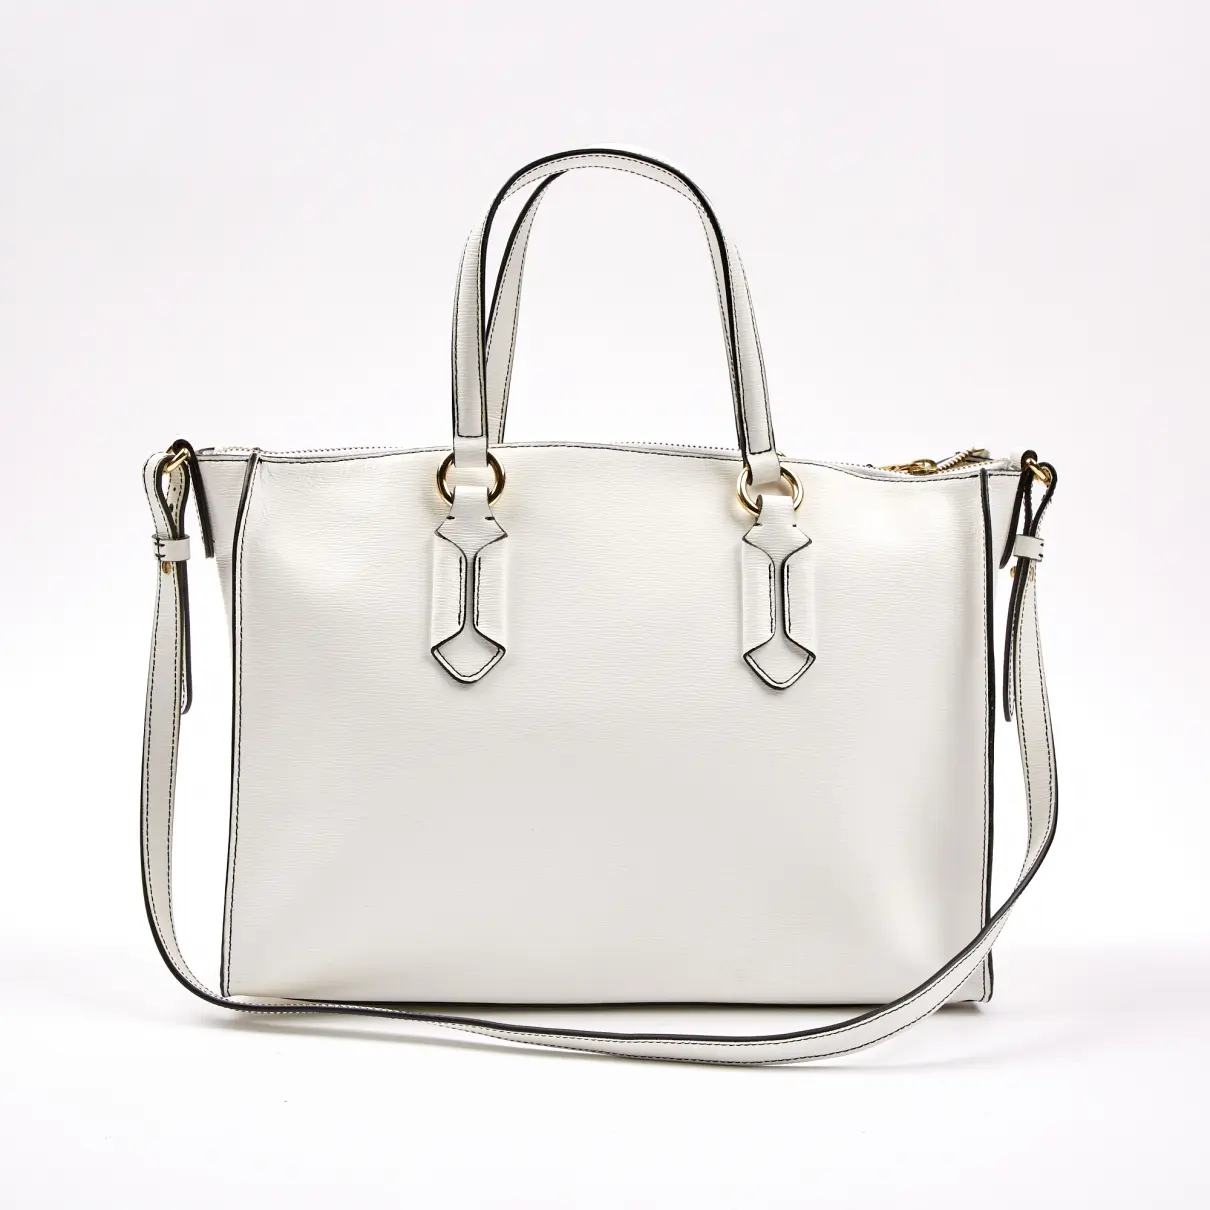 Buy Ralph Lauren Collection White Leather Handbag online